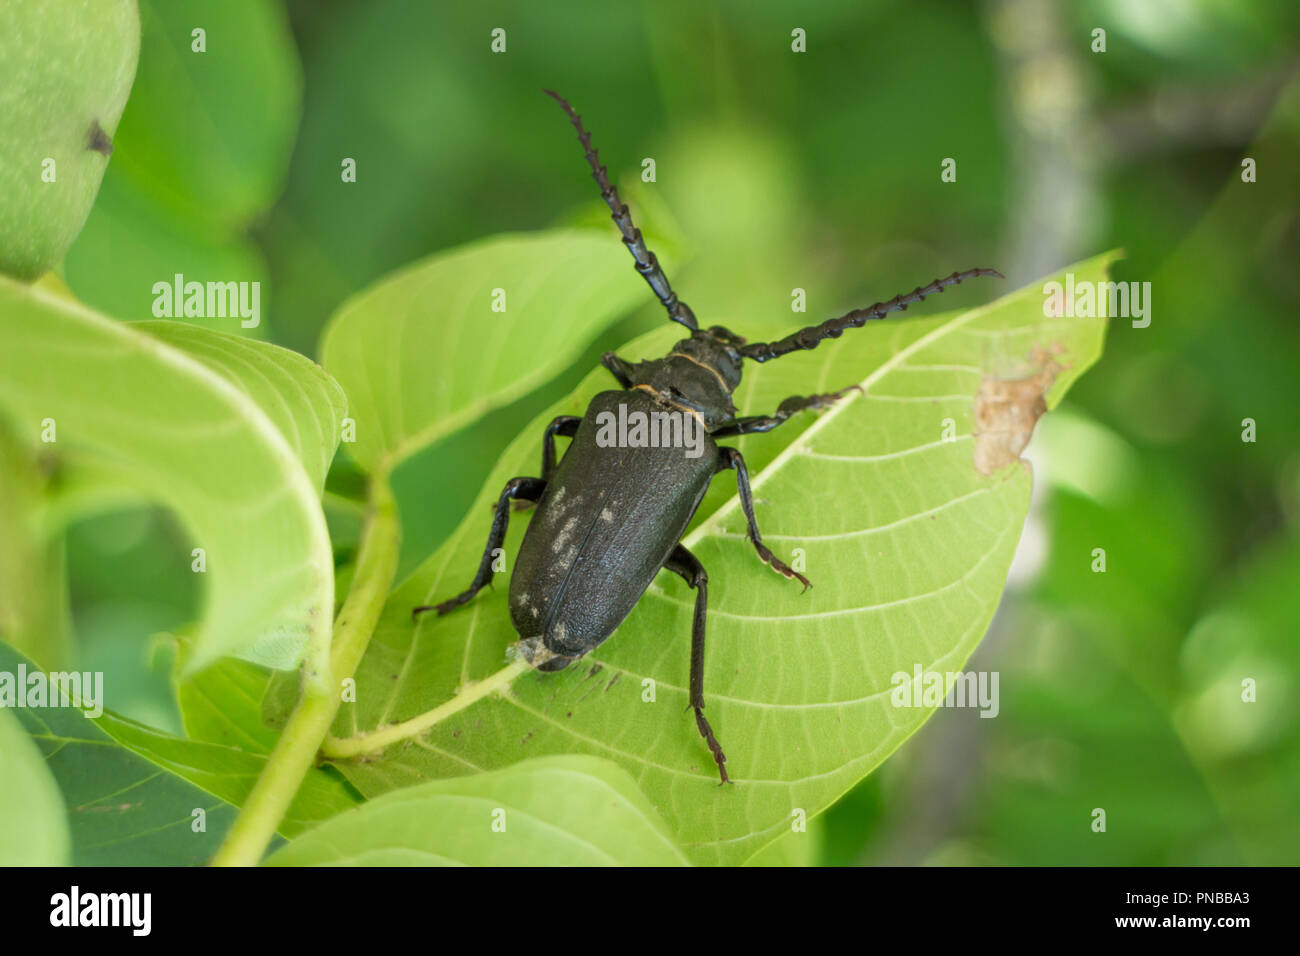 Big female beetle prionus coriarius on green leaf Stock Photo